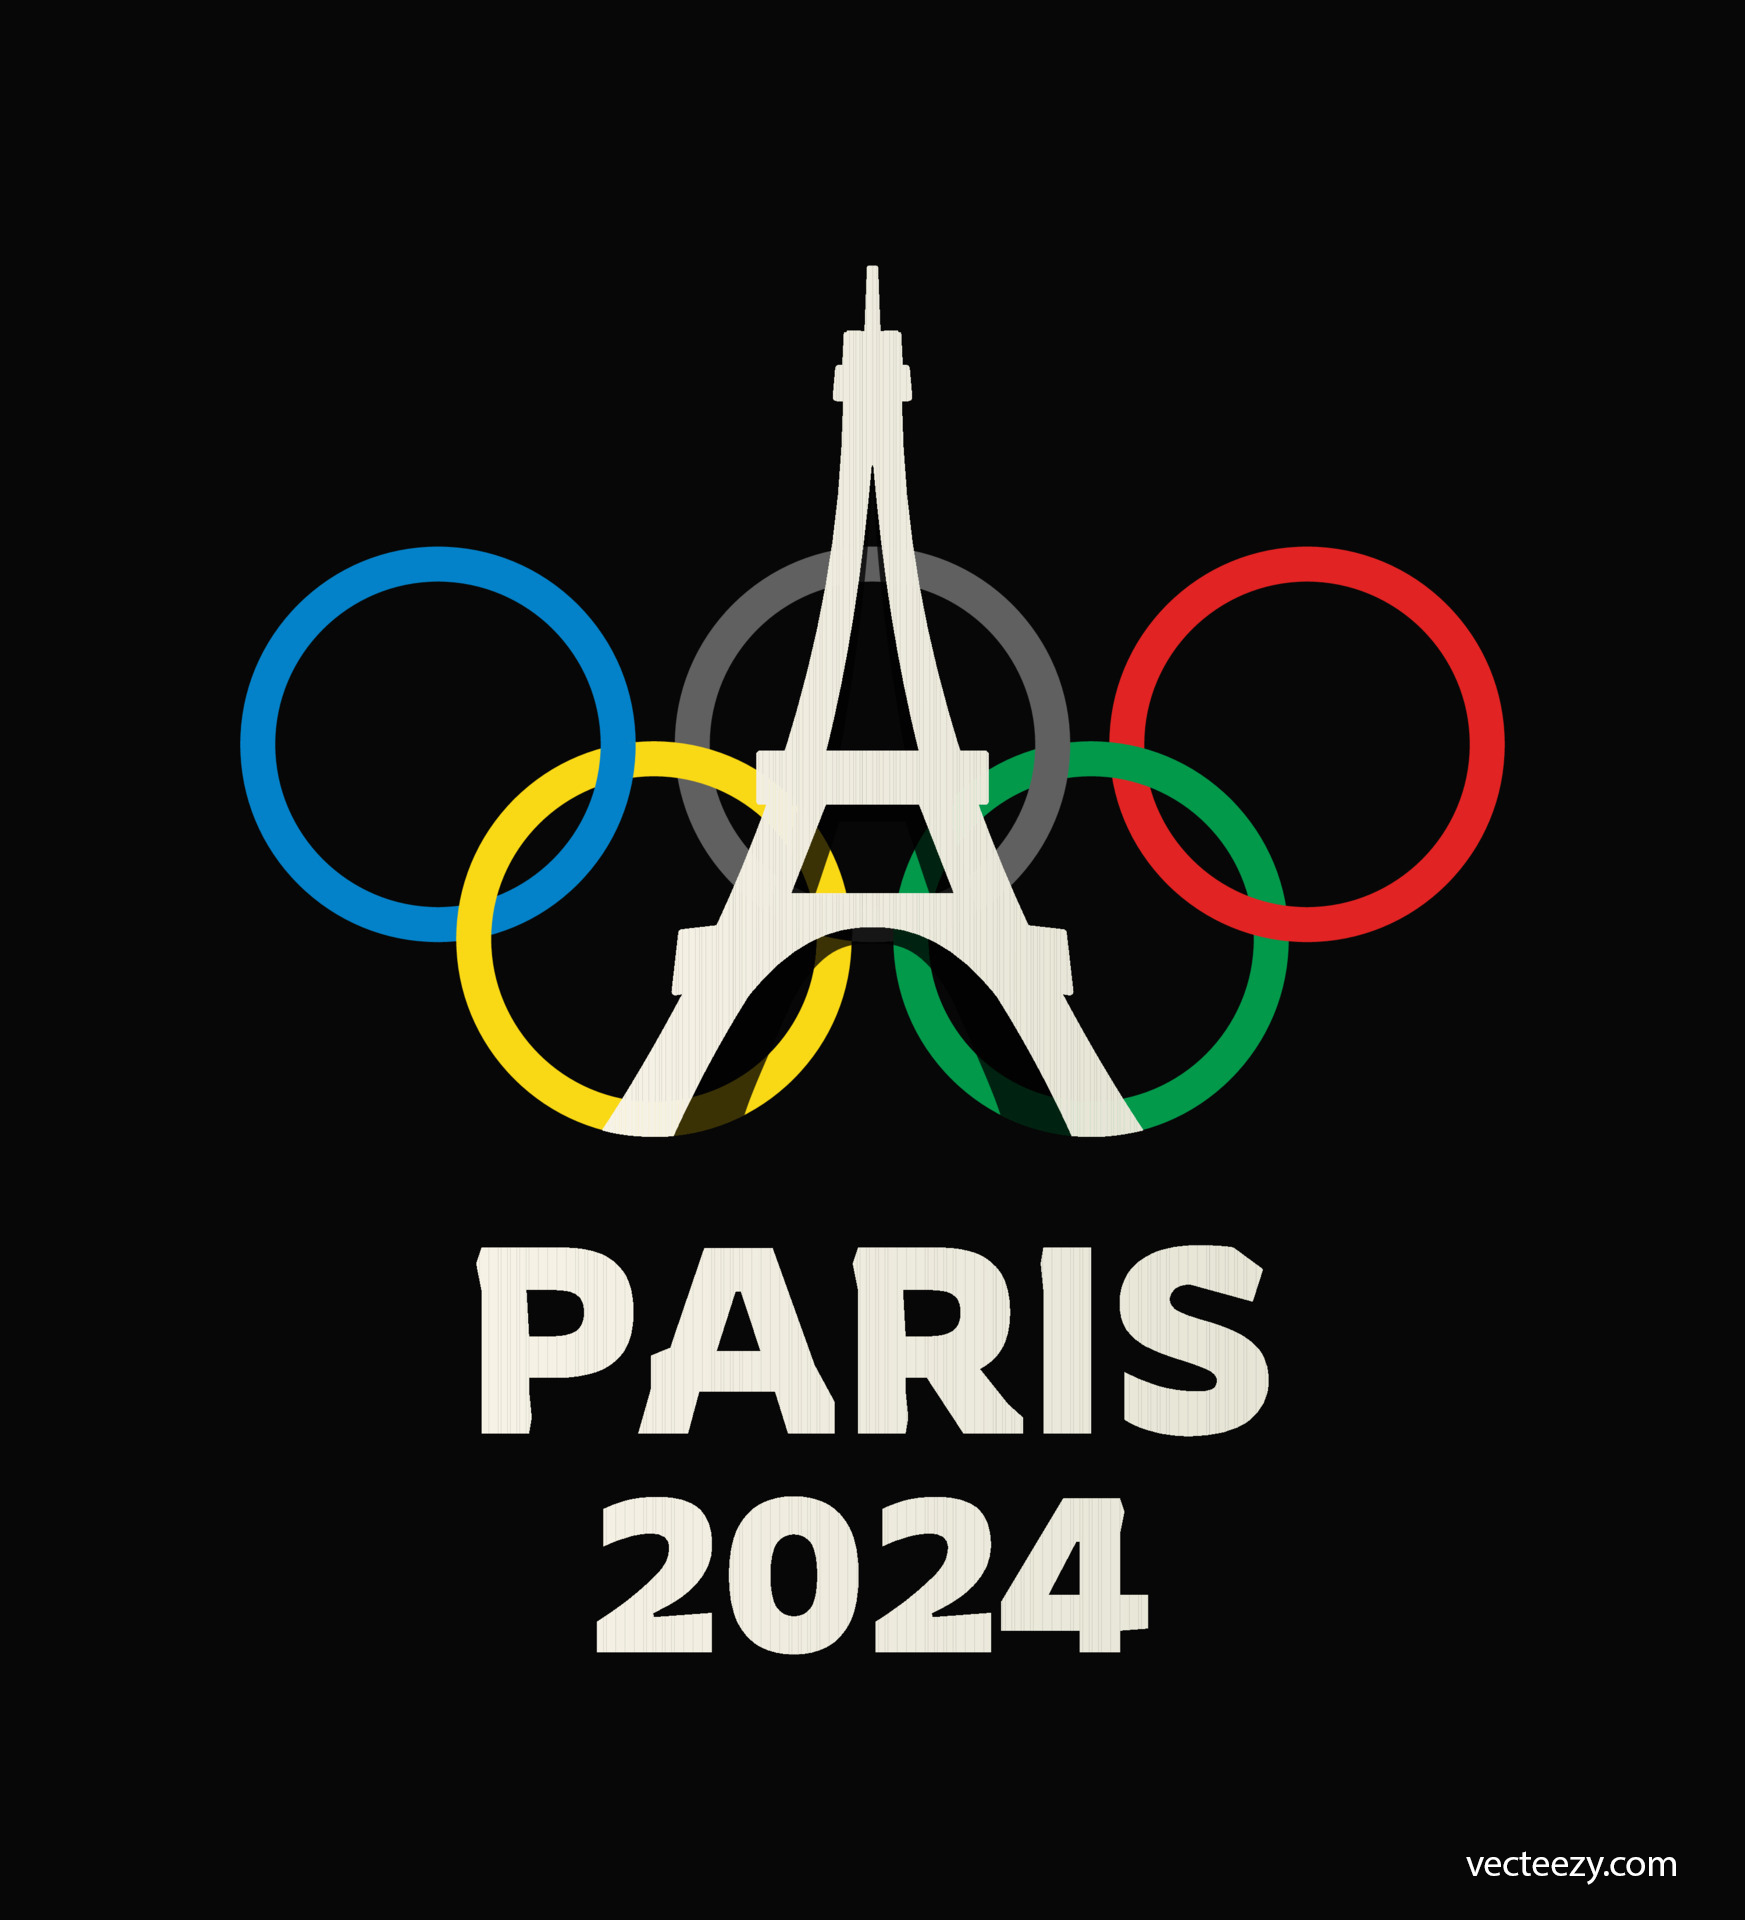 vecteezy_olympic-logo-paris-2024-vector-illustration-isolated-on_21574763